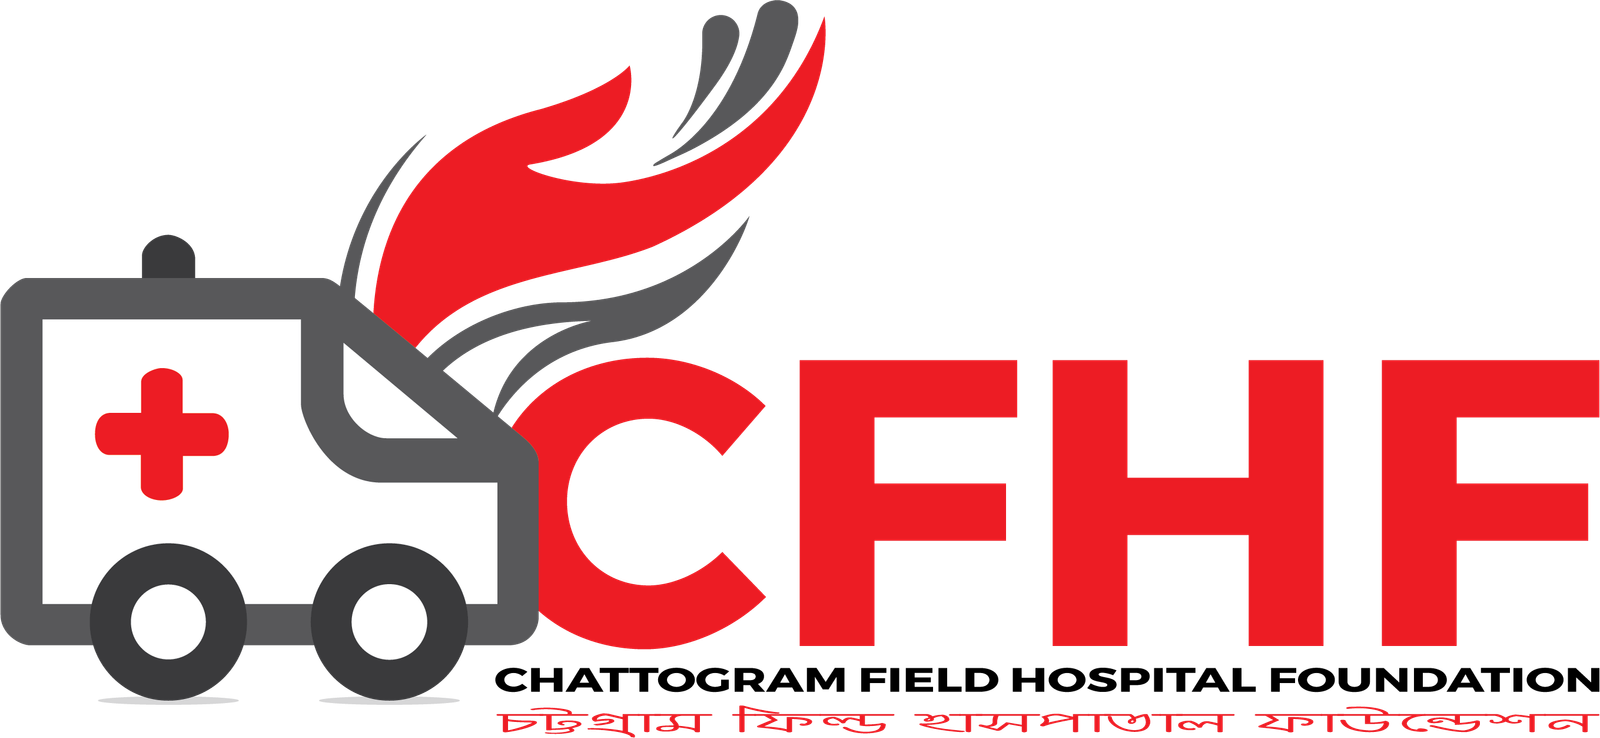 Chattogram Field Hospital Foundation